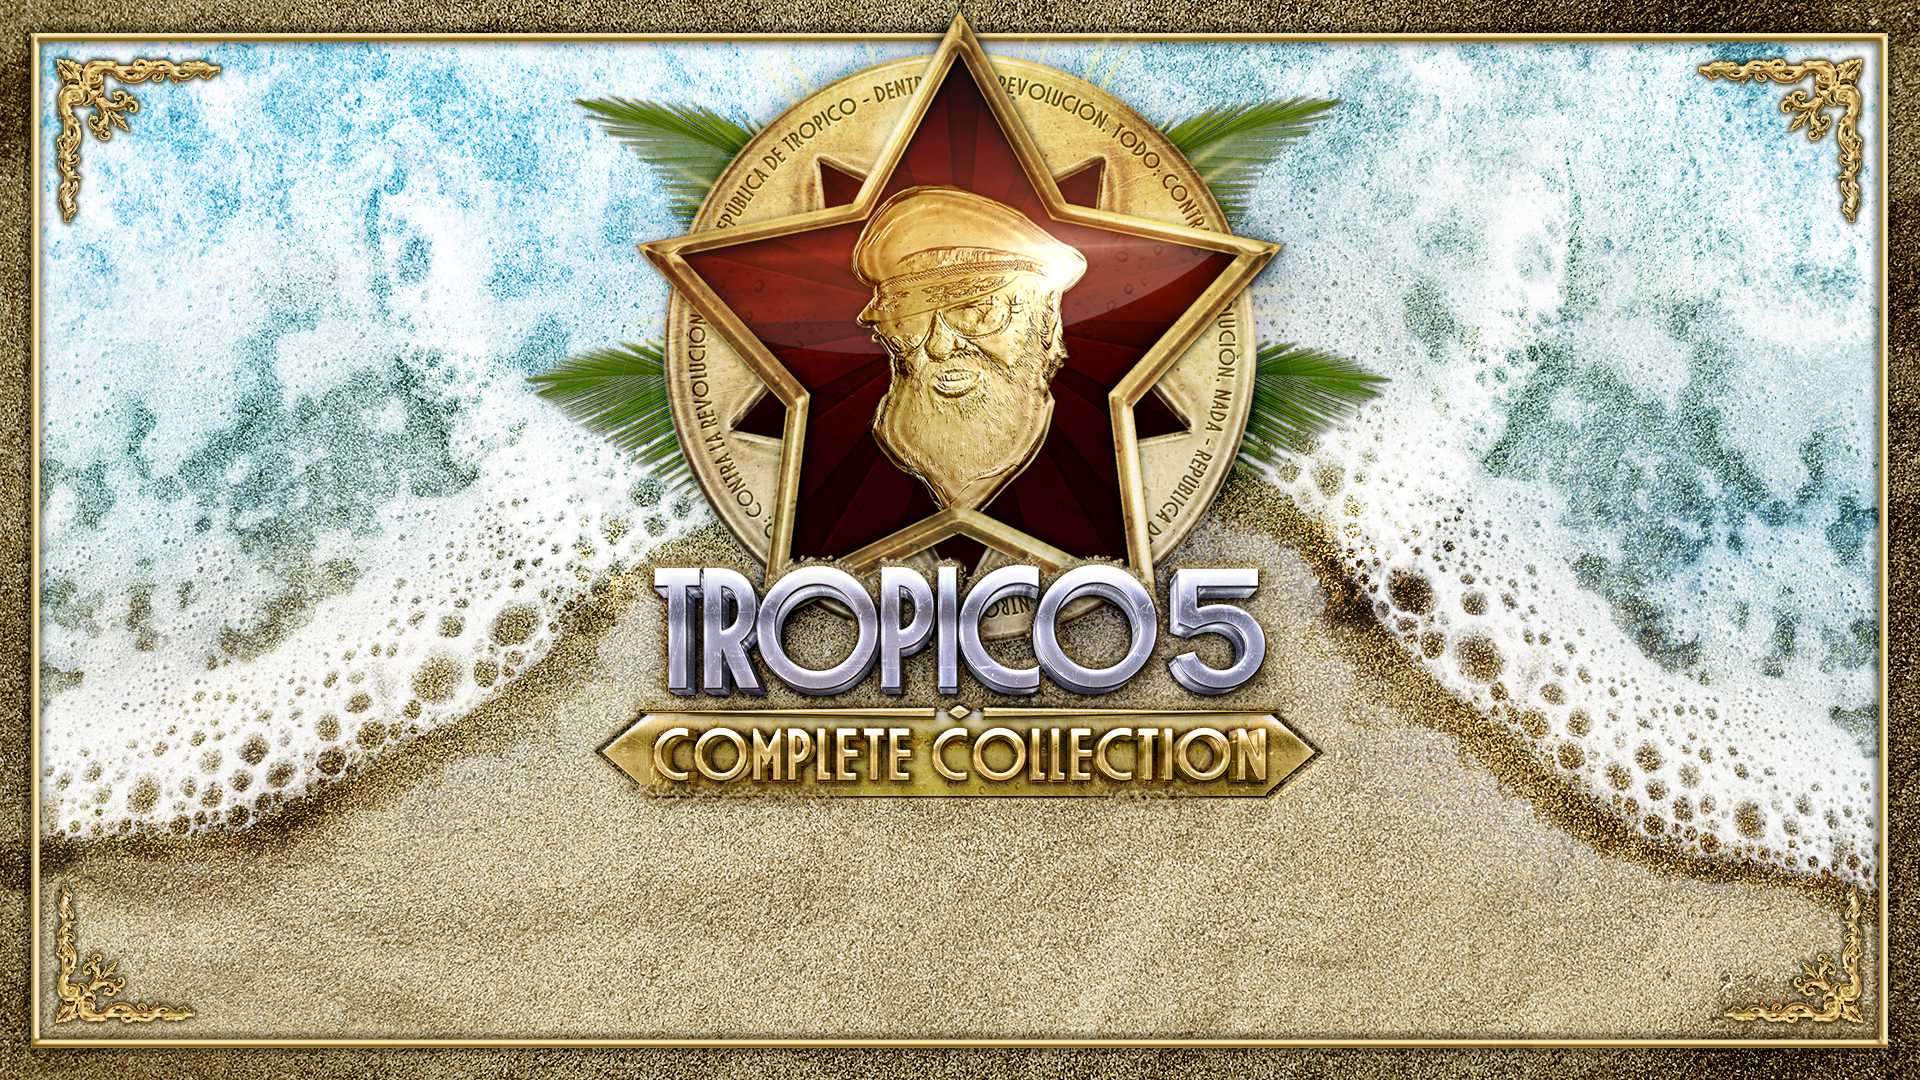  Tropico 5 - Complete Collection